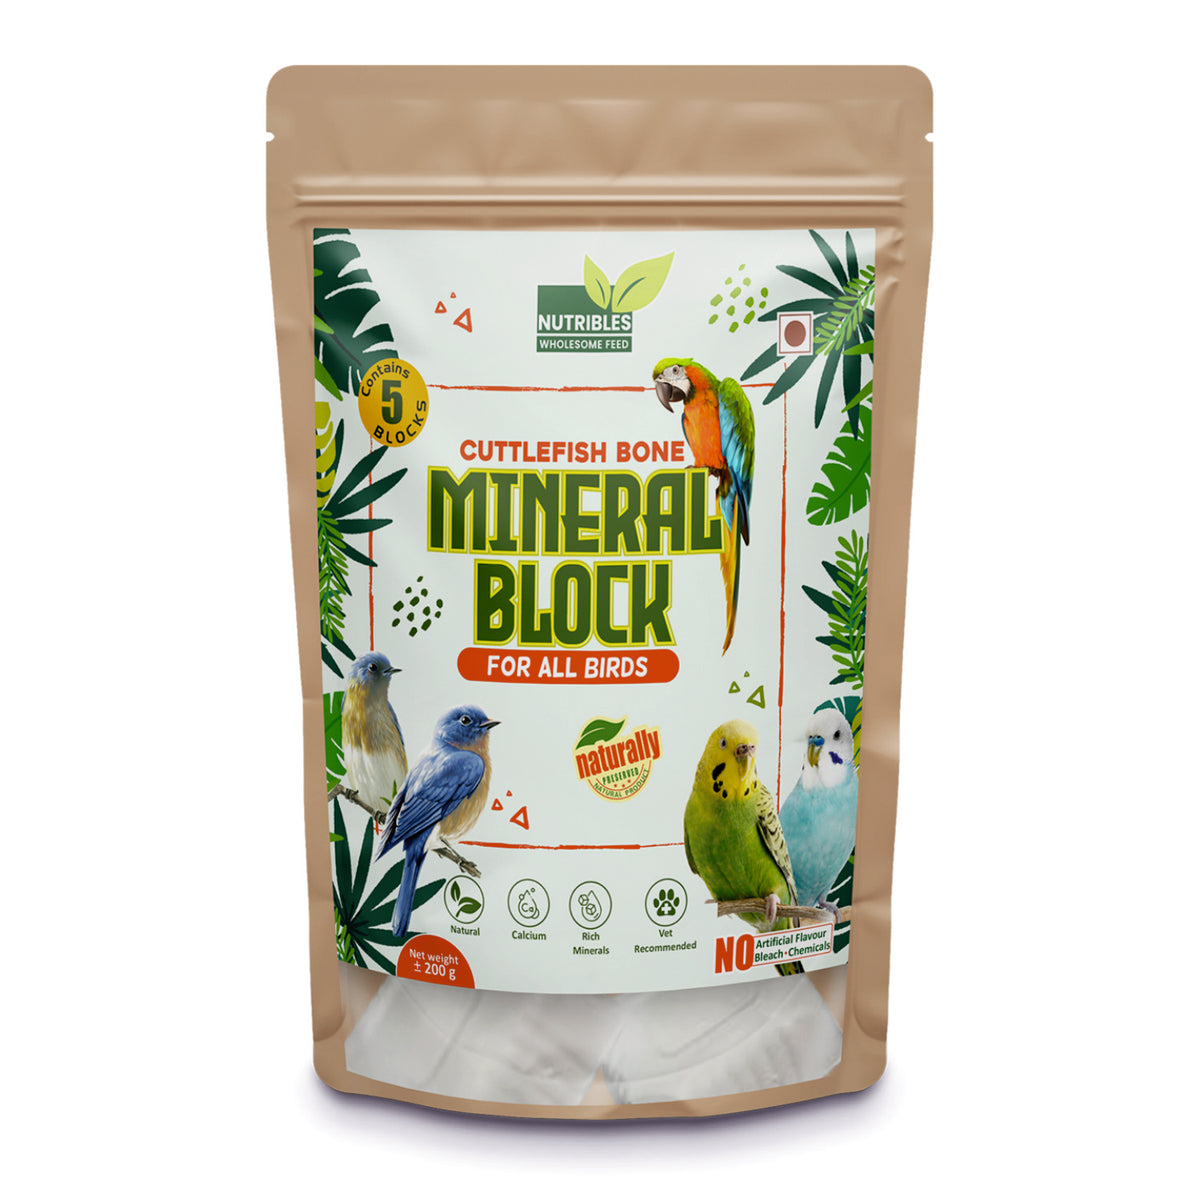 Nutribles Cuttlefish Bone Mineral Block for All Birds - 450 GMS (Pack of 5 Blocks)| Calcium Bird Feed | Natural Cuttlefish Bone Nutrition for All Birds - Avian Veterinarian Verified